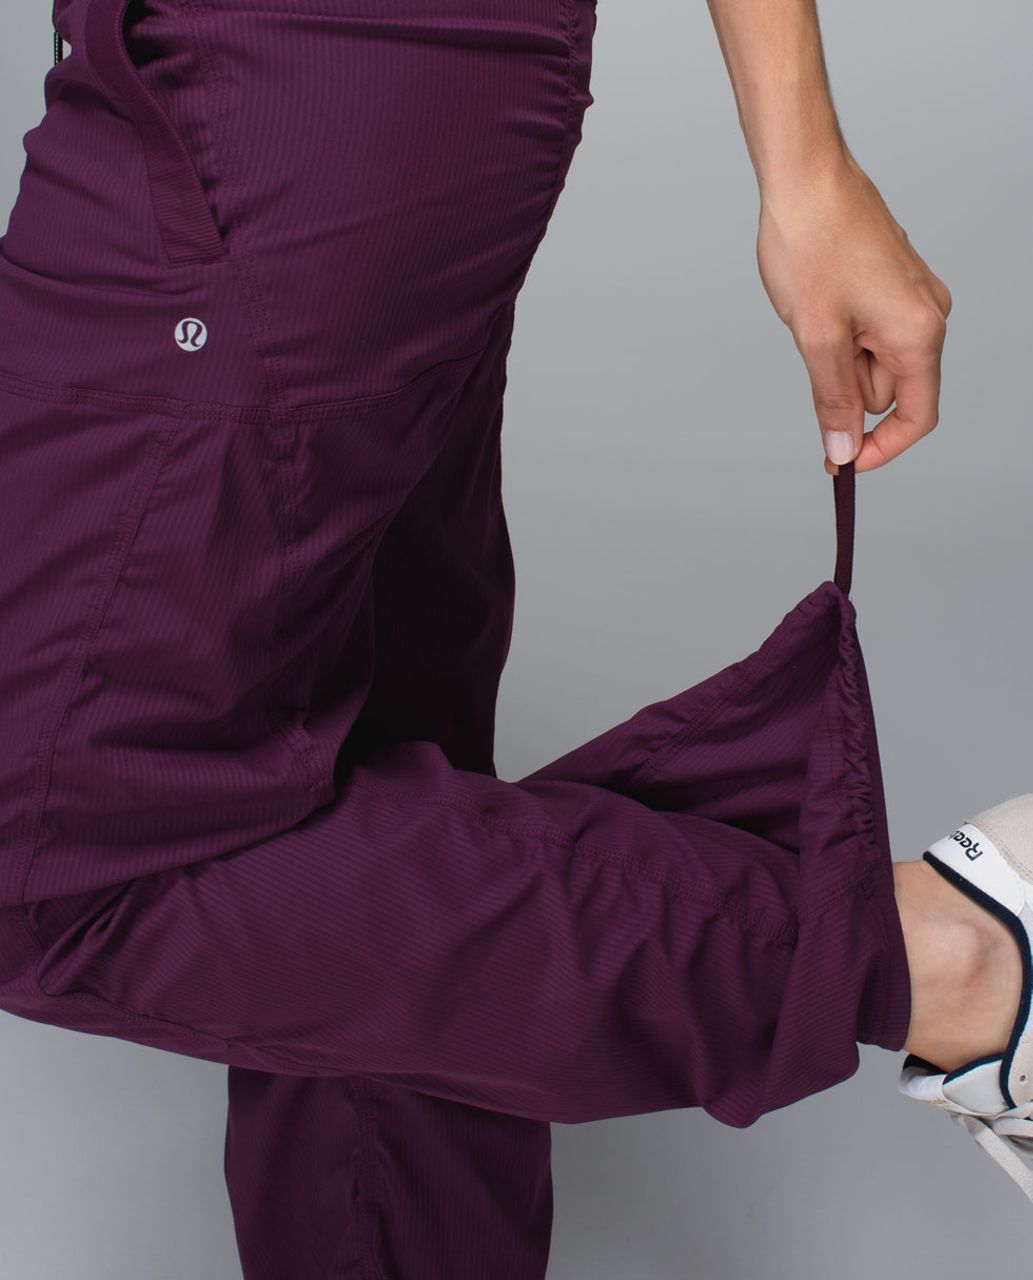 Lululemon Dance Studio Pants Lined Purple Size 6 - $31 (71% Off